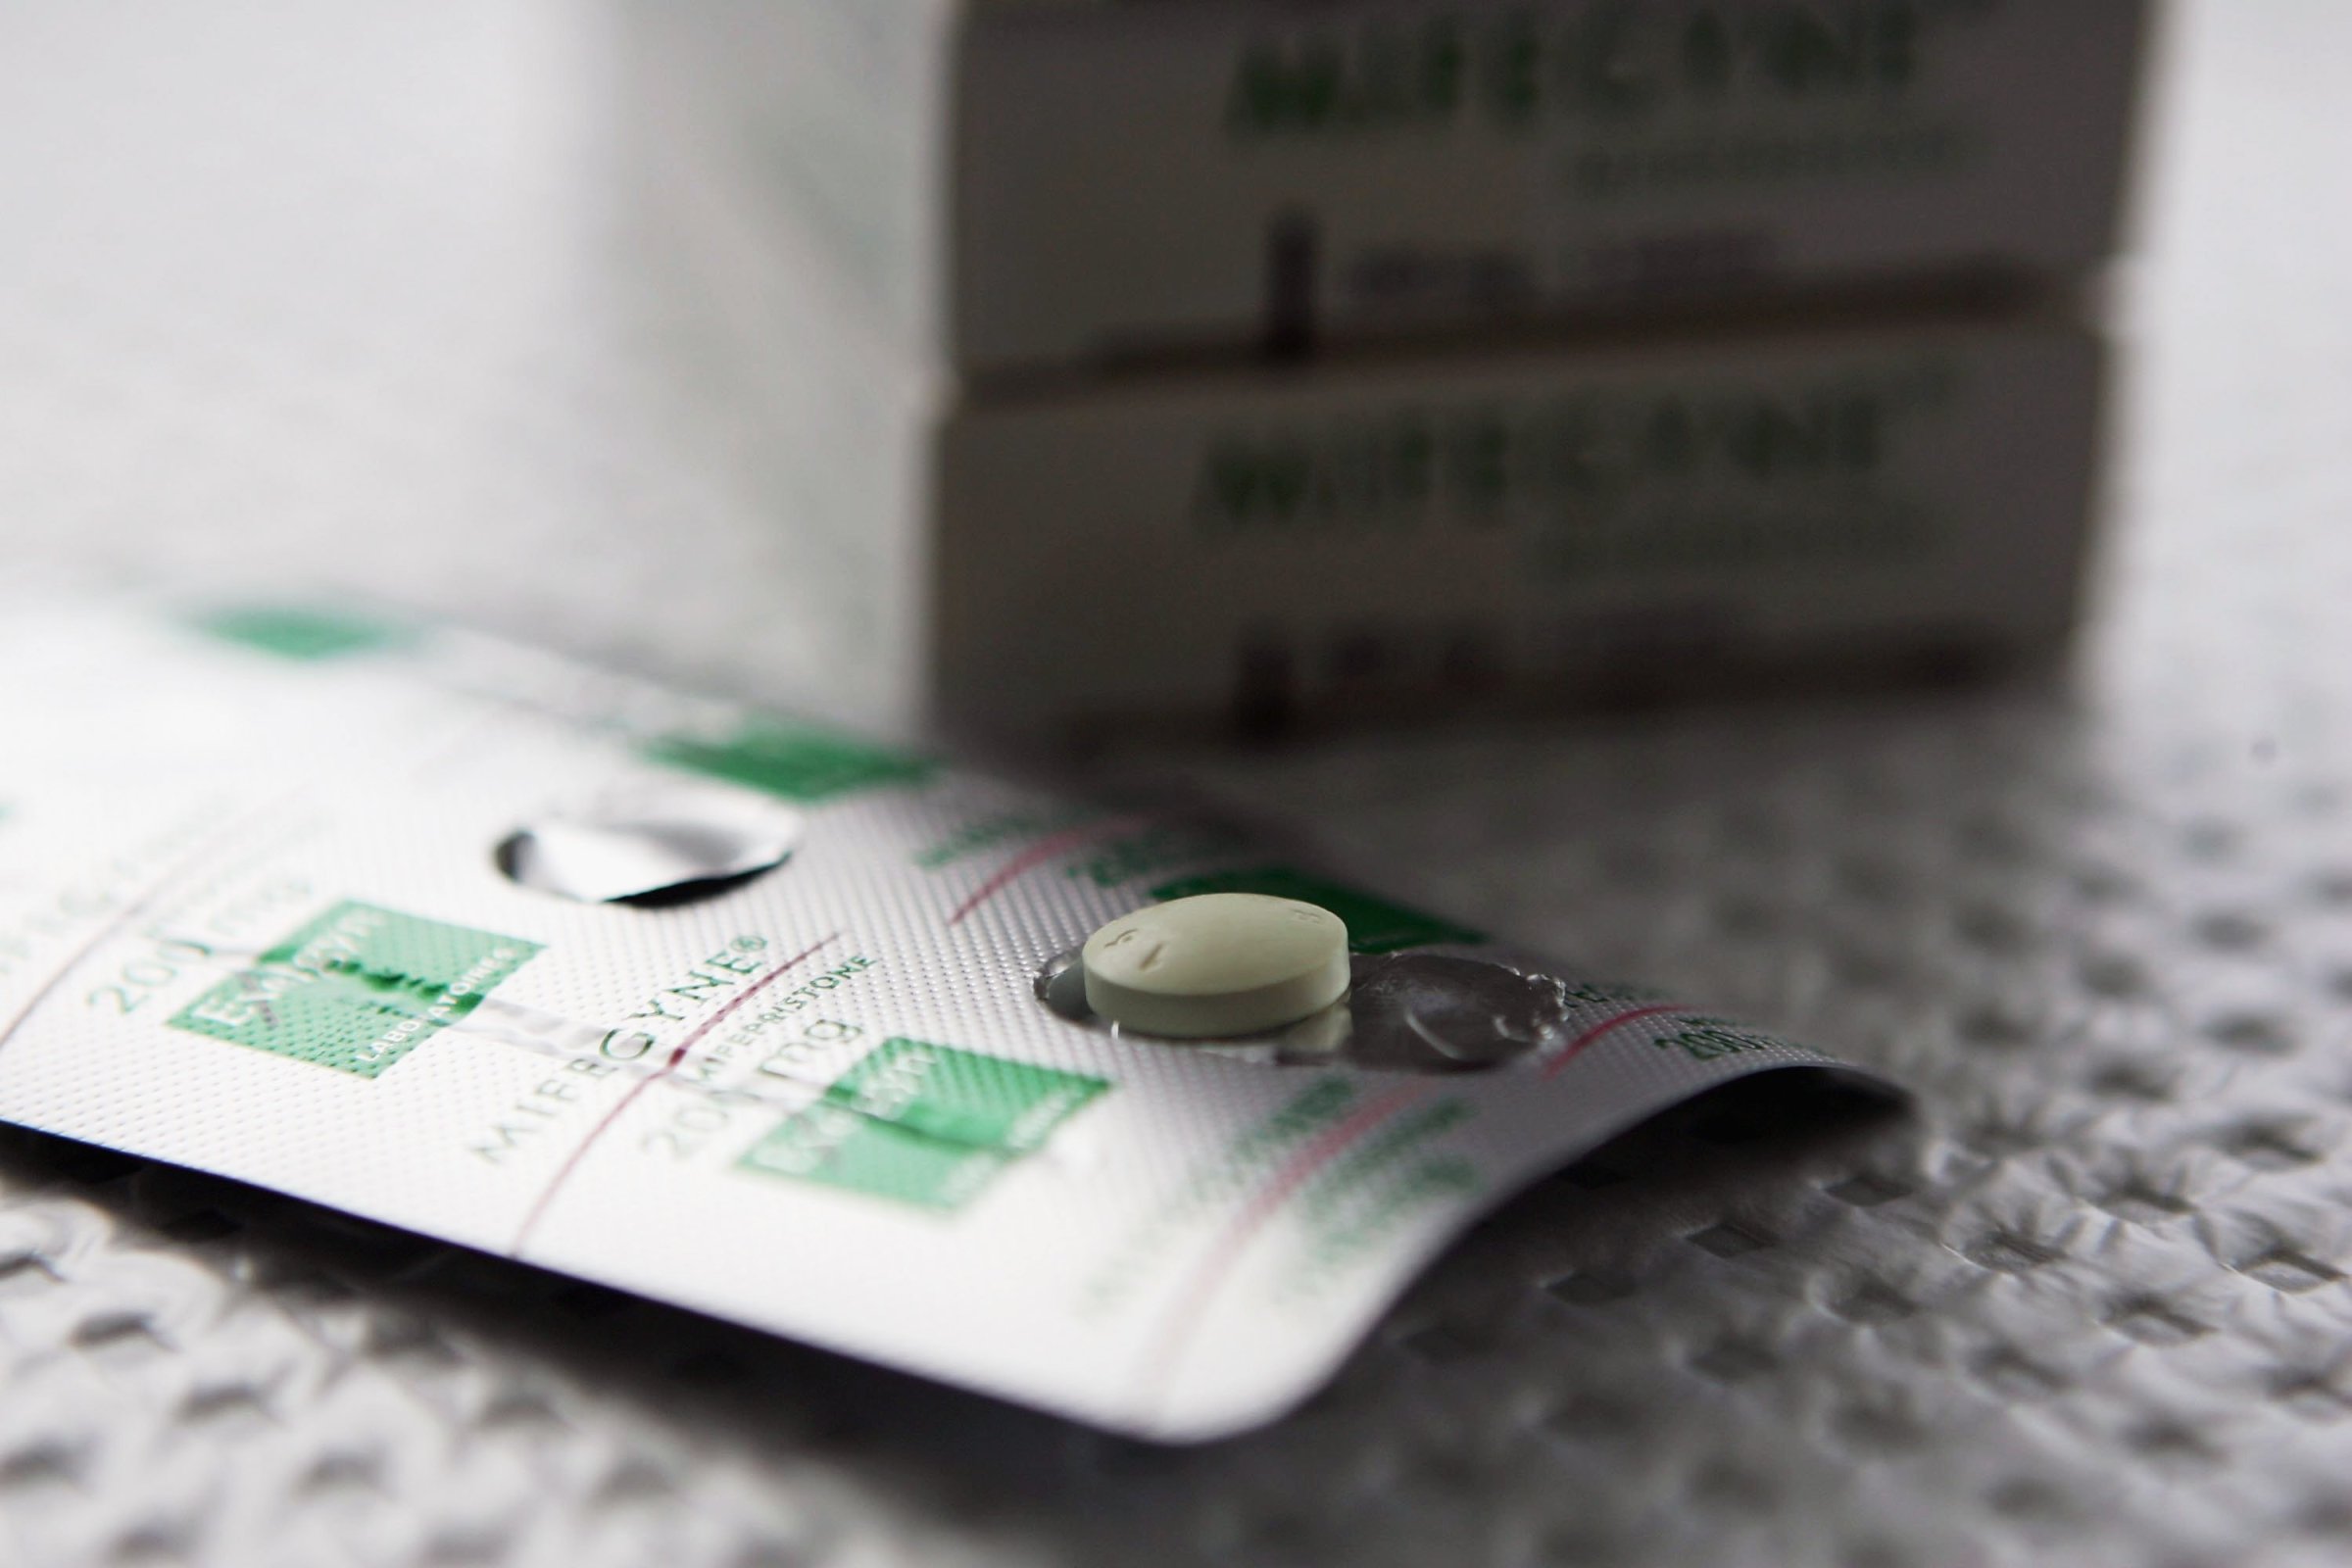 The abortion drug mifepristone, also known as RU-486.